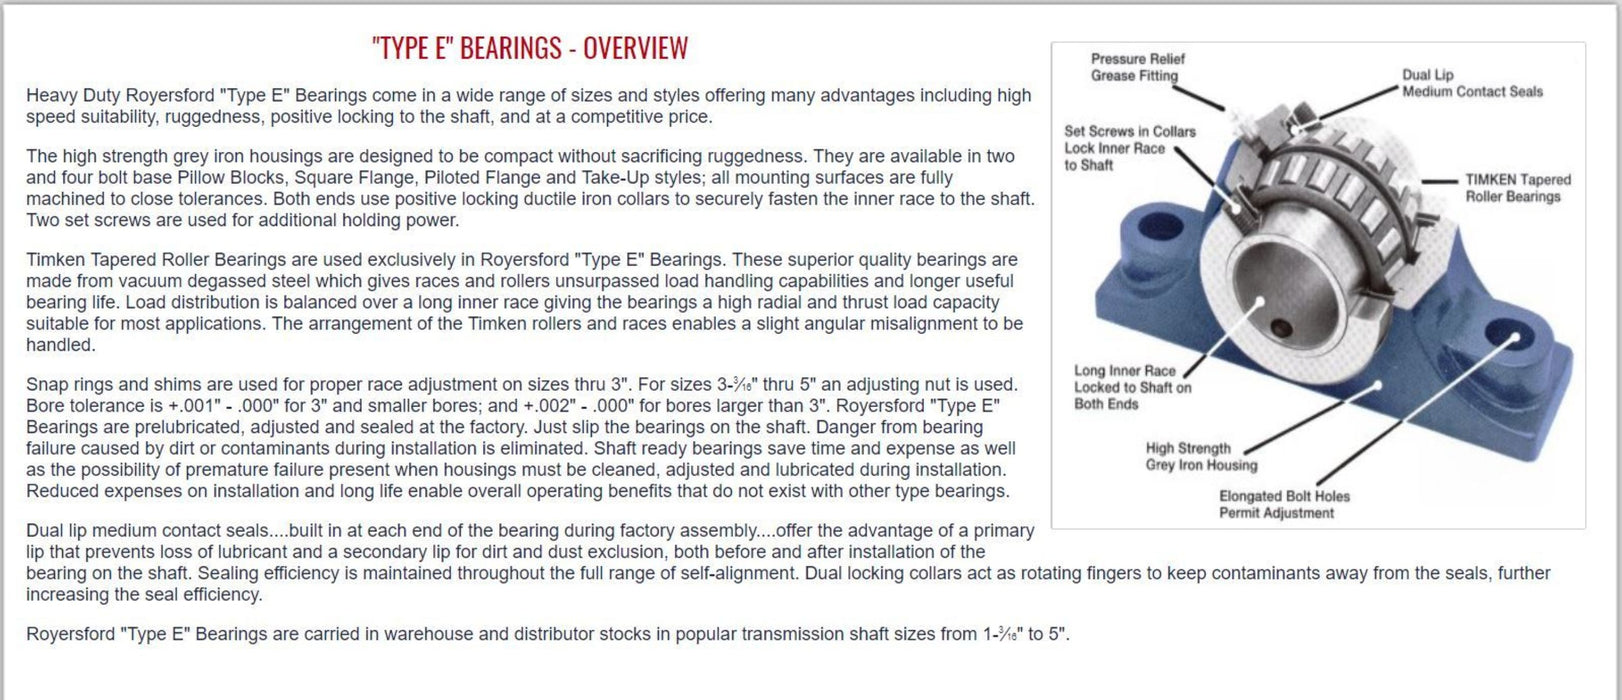 20-02-0103, Royersford TYPE E Pillow Block Bearing, 1-3/16 with Timken Tapered Roller Bearings